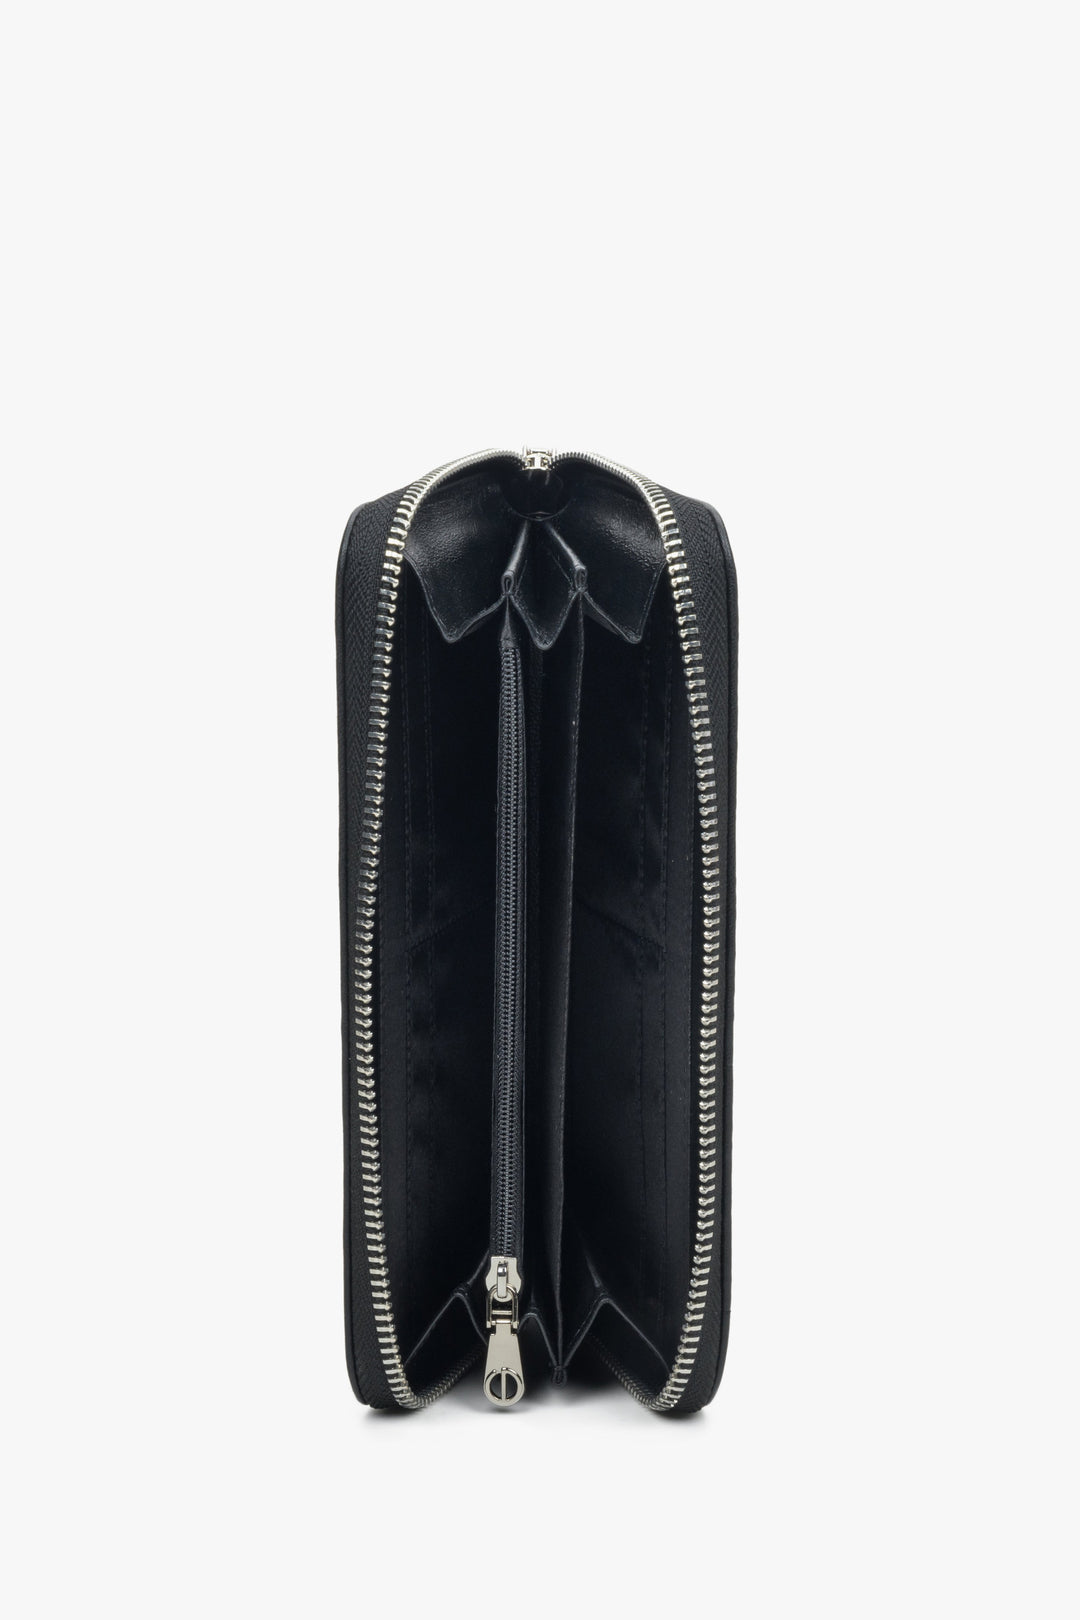 Estro women's large black continental wallet with a zipper - interior.